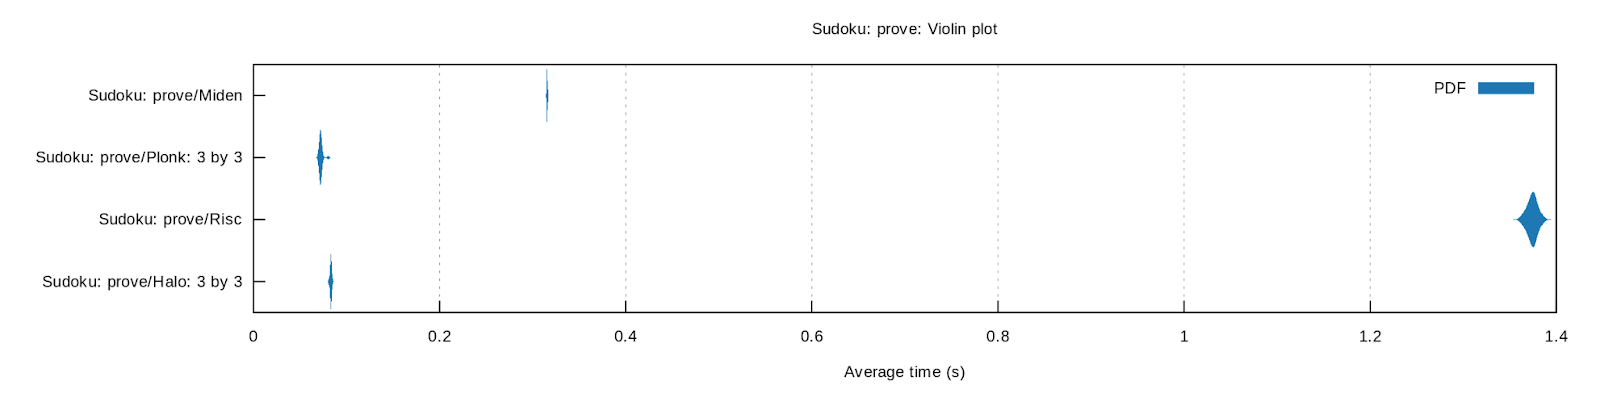 Sudoku: prove: Violin plot